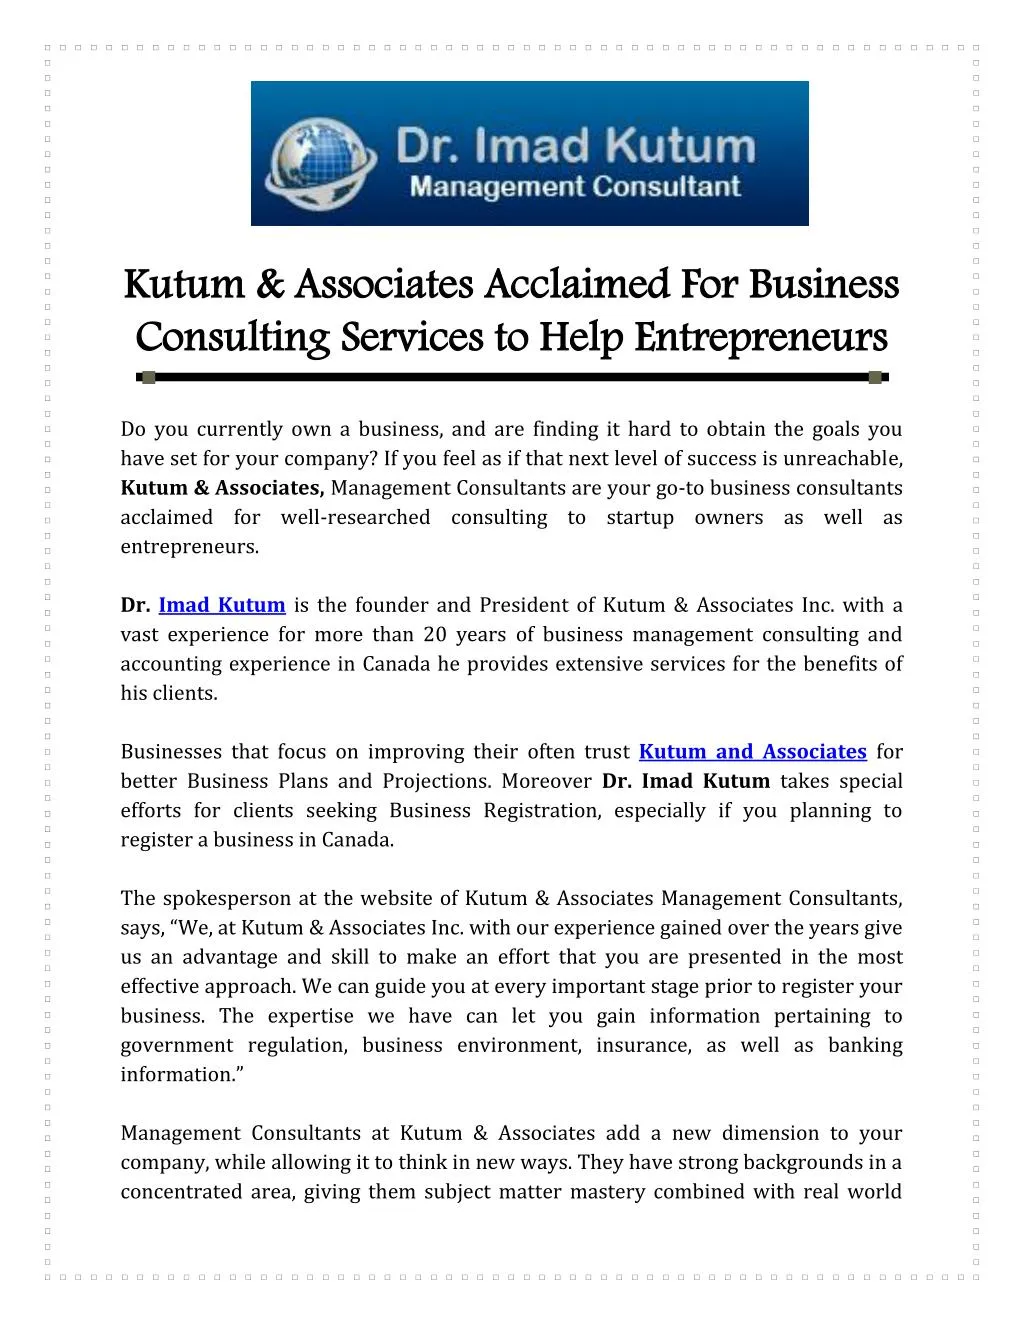 kutum associates acclaimed for business kutum